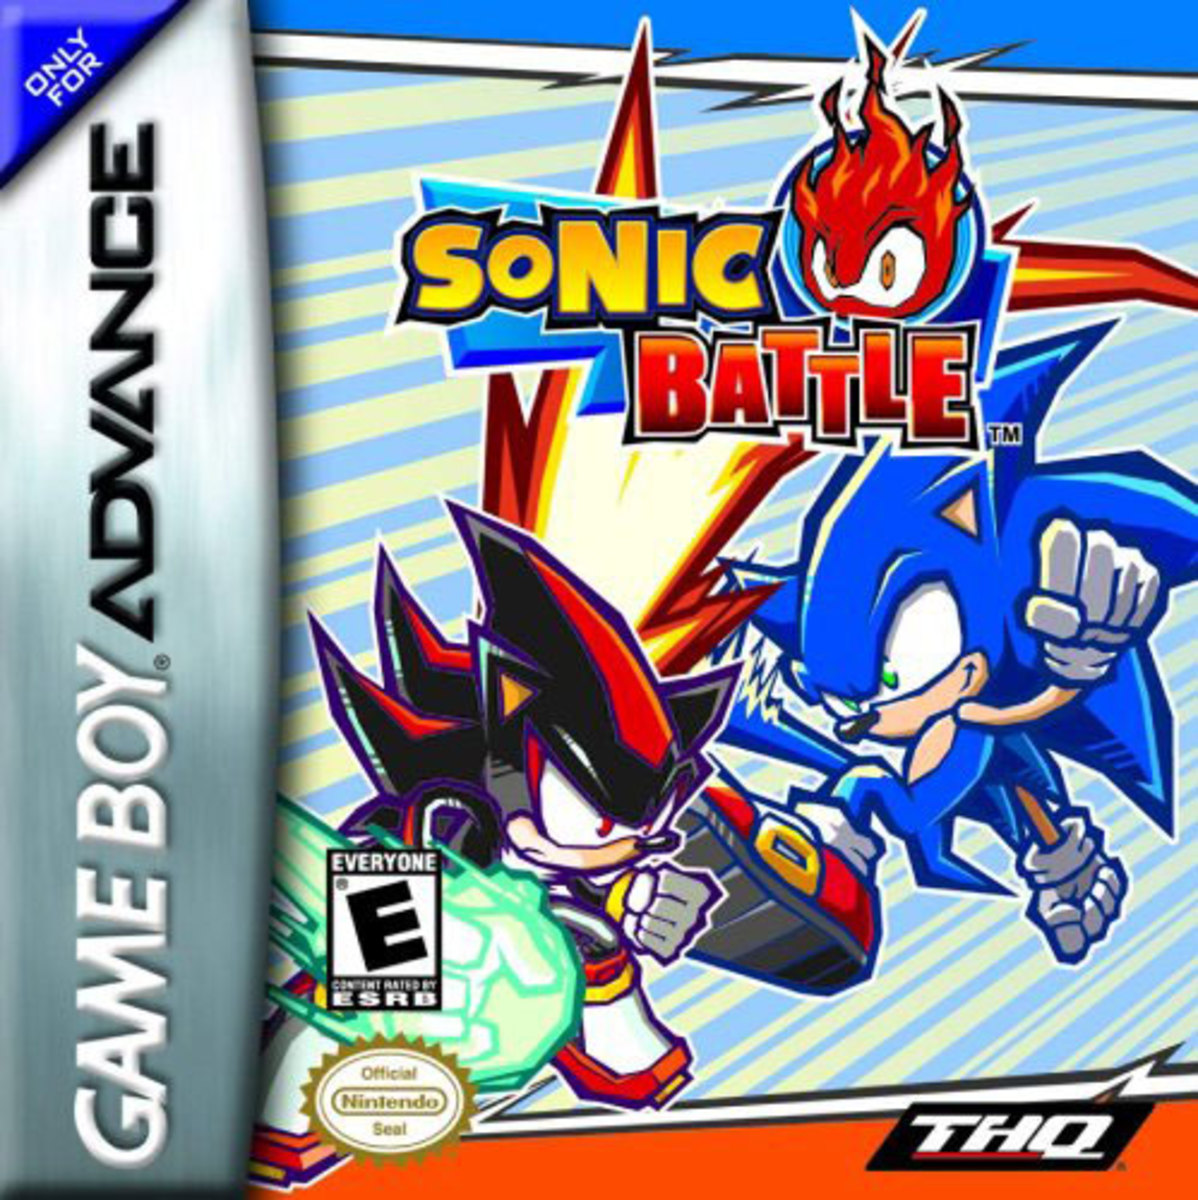 "Sonic Battle" GameBoy Advance Cover Art